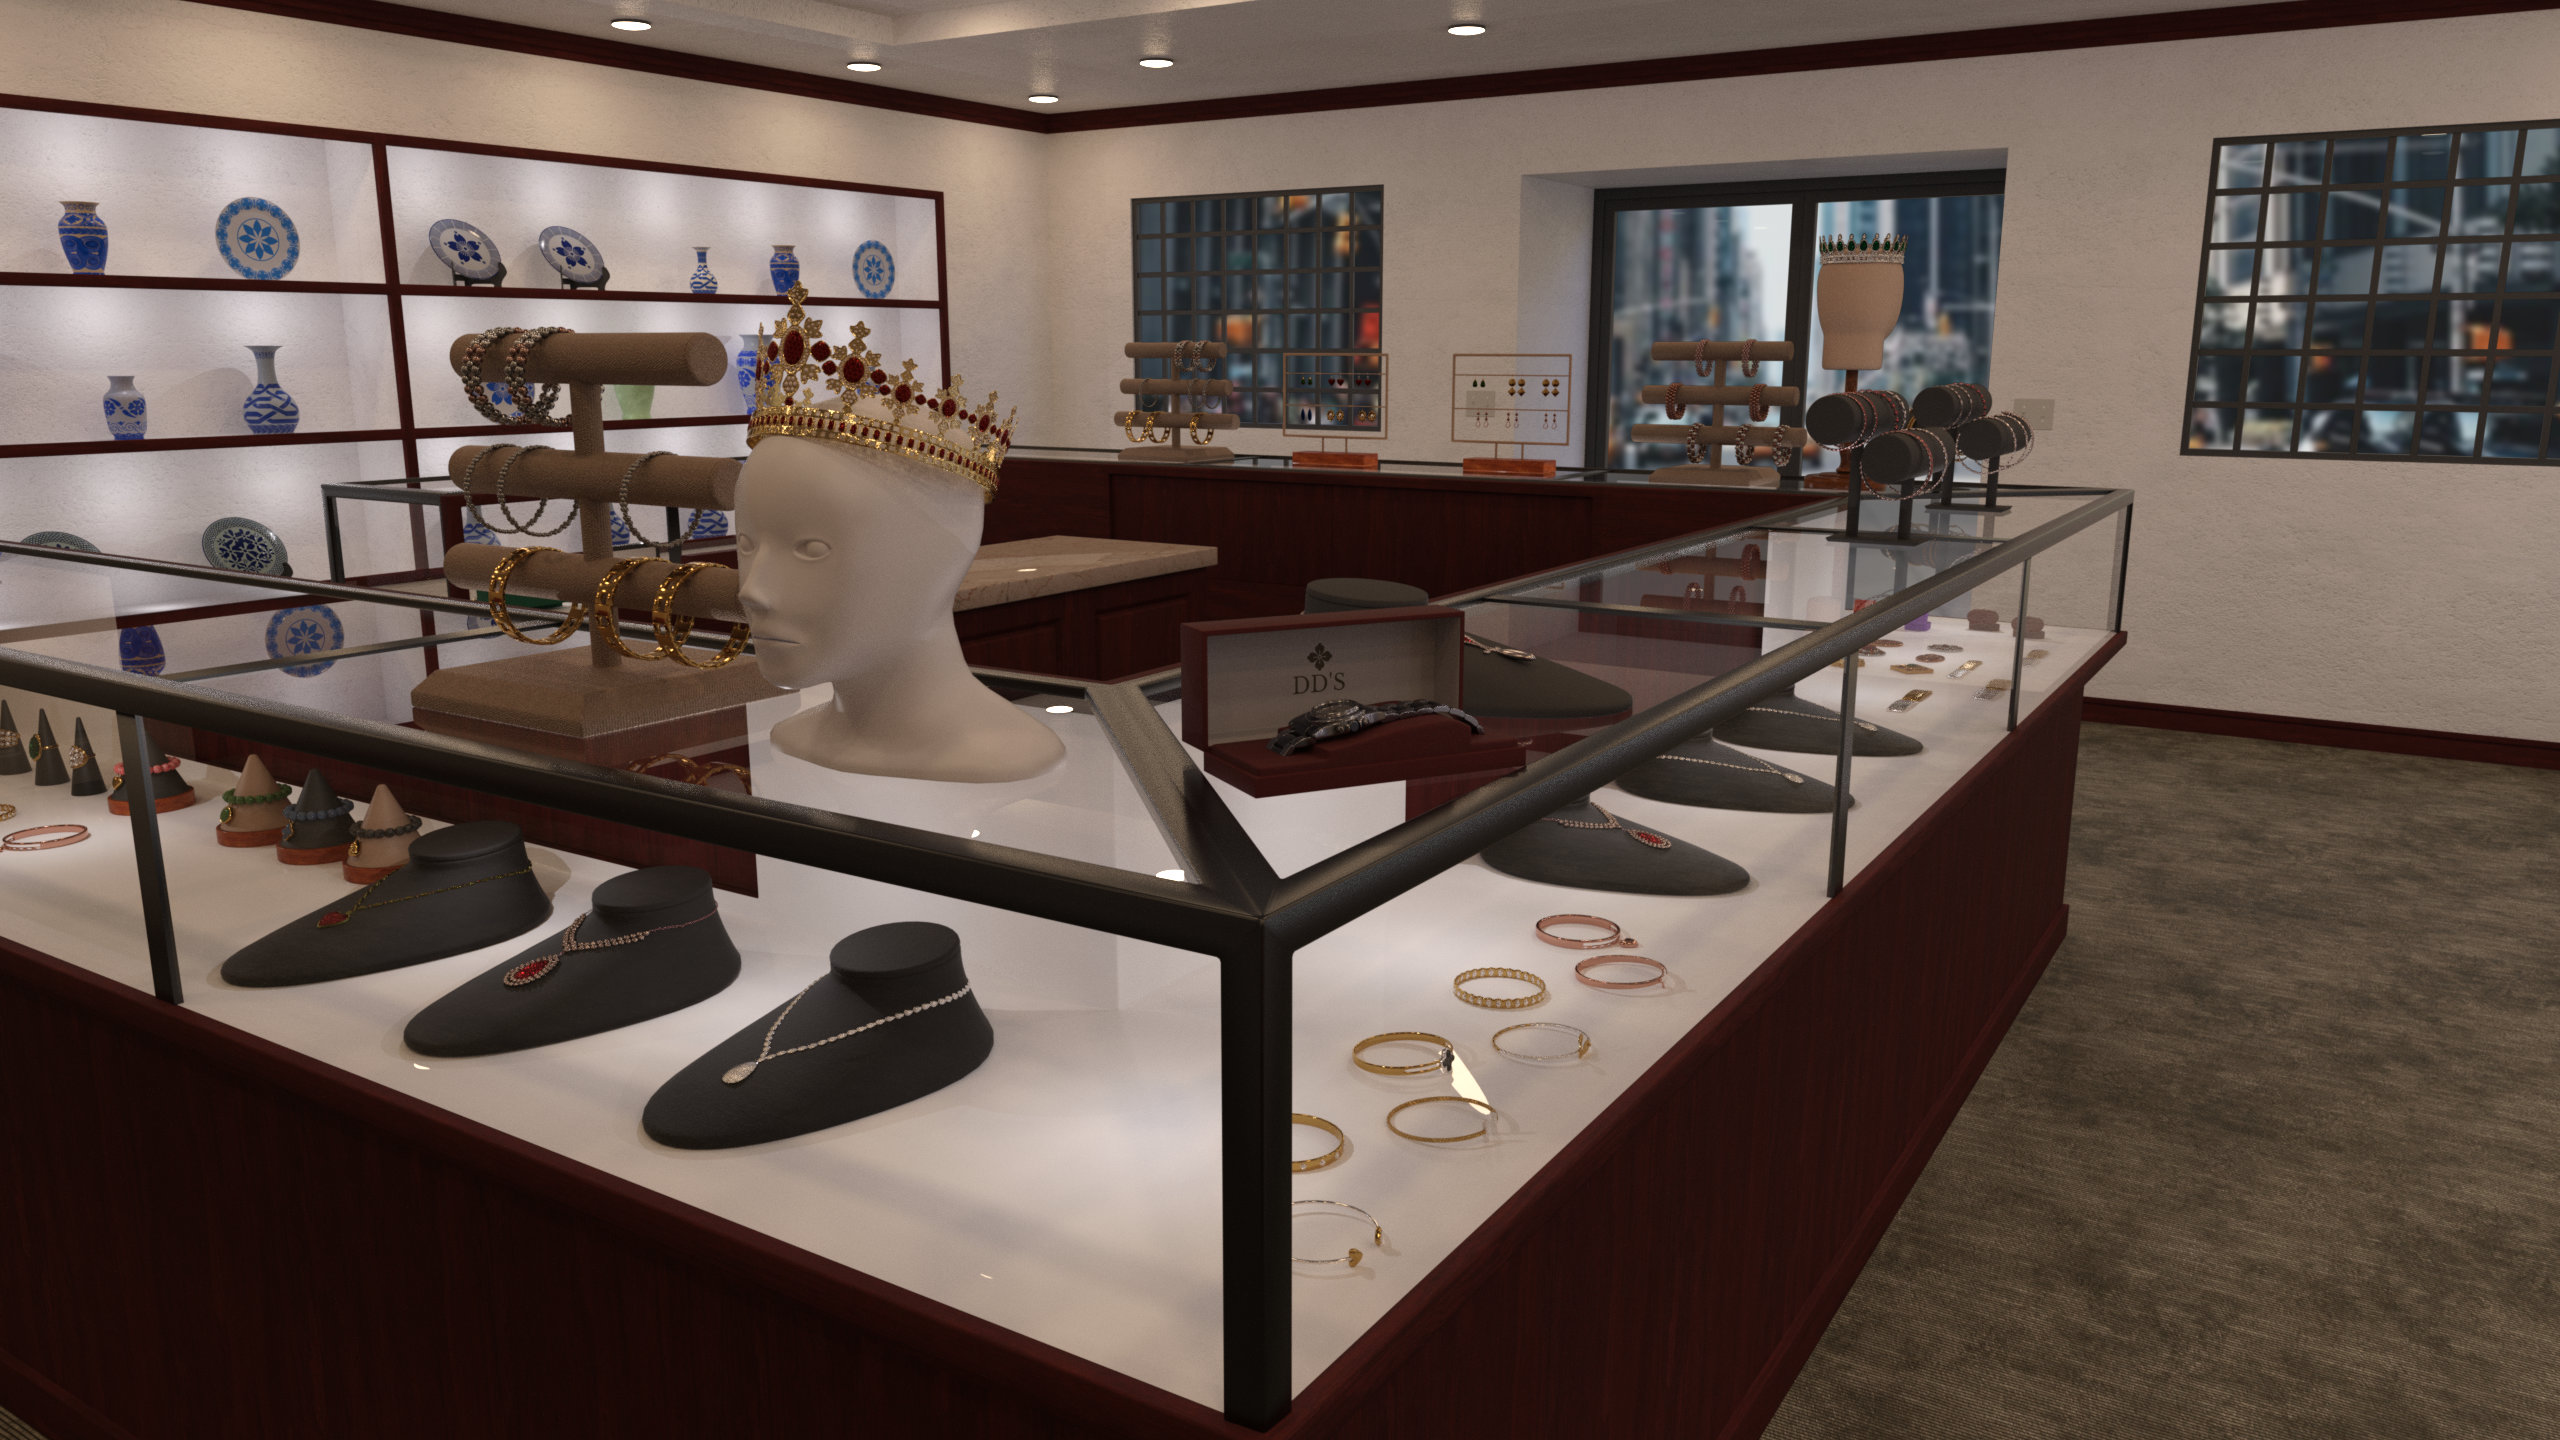 FG Jewelry Store by: IronmanFugazi1968, 3D Models by Daz 3D